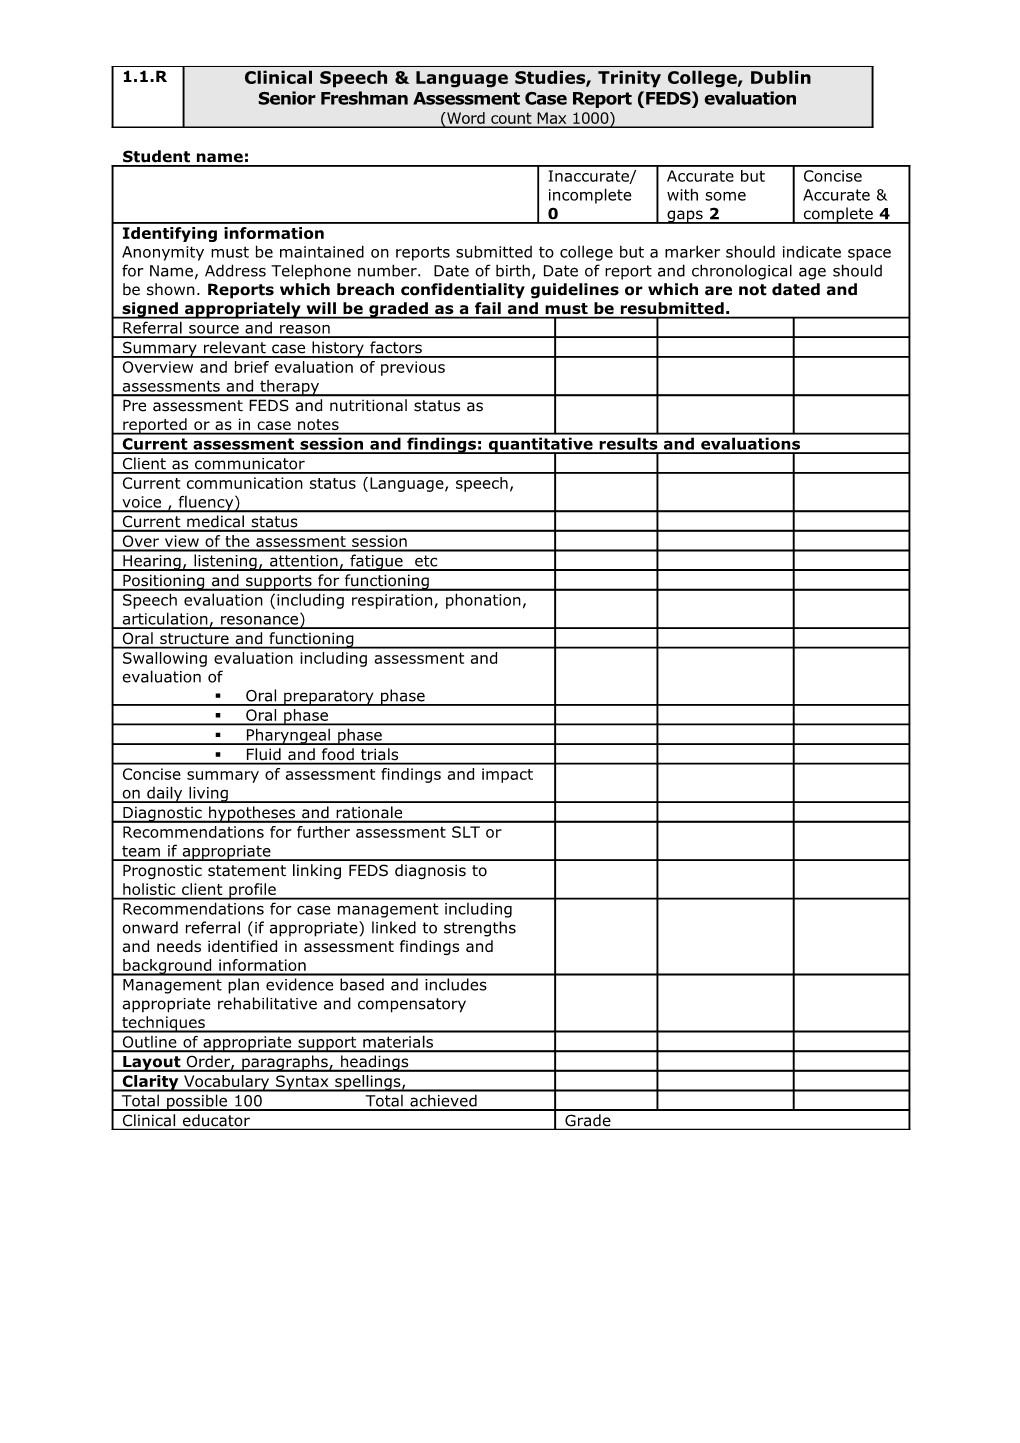 Senior Freshman Assessment Case Report (FEDS) Evaluation